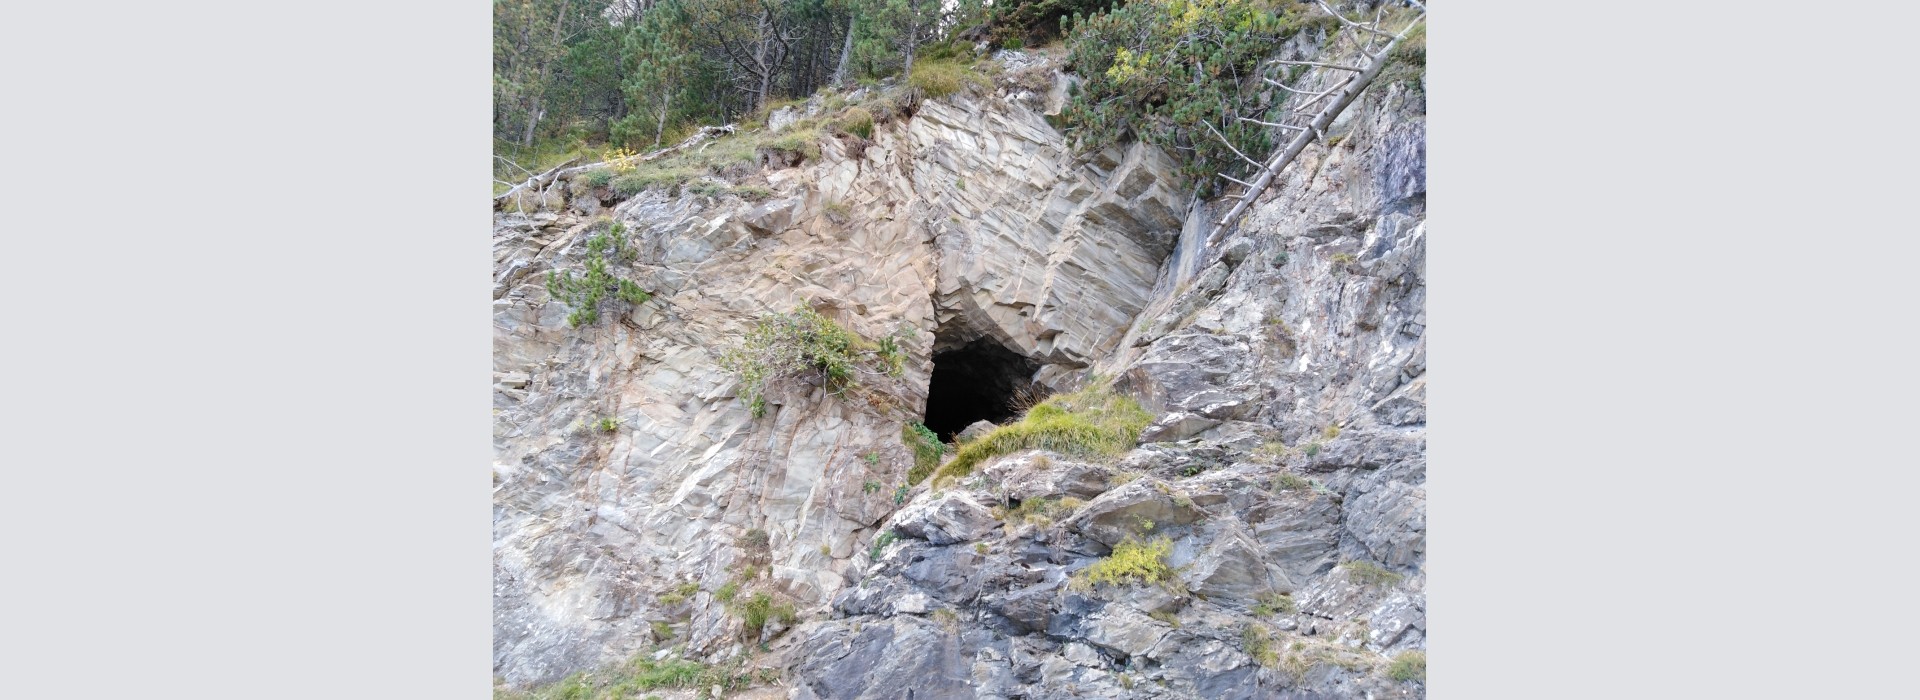 Salida del GMC a la mina “Zaragoza” (Queralbs) y a las escombreras de las minas del collet de les Barraques (Planoles), en la Vall de Ribes, el Ripollès, Girona.